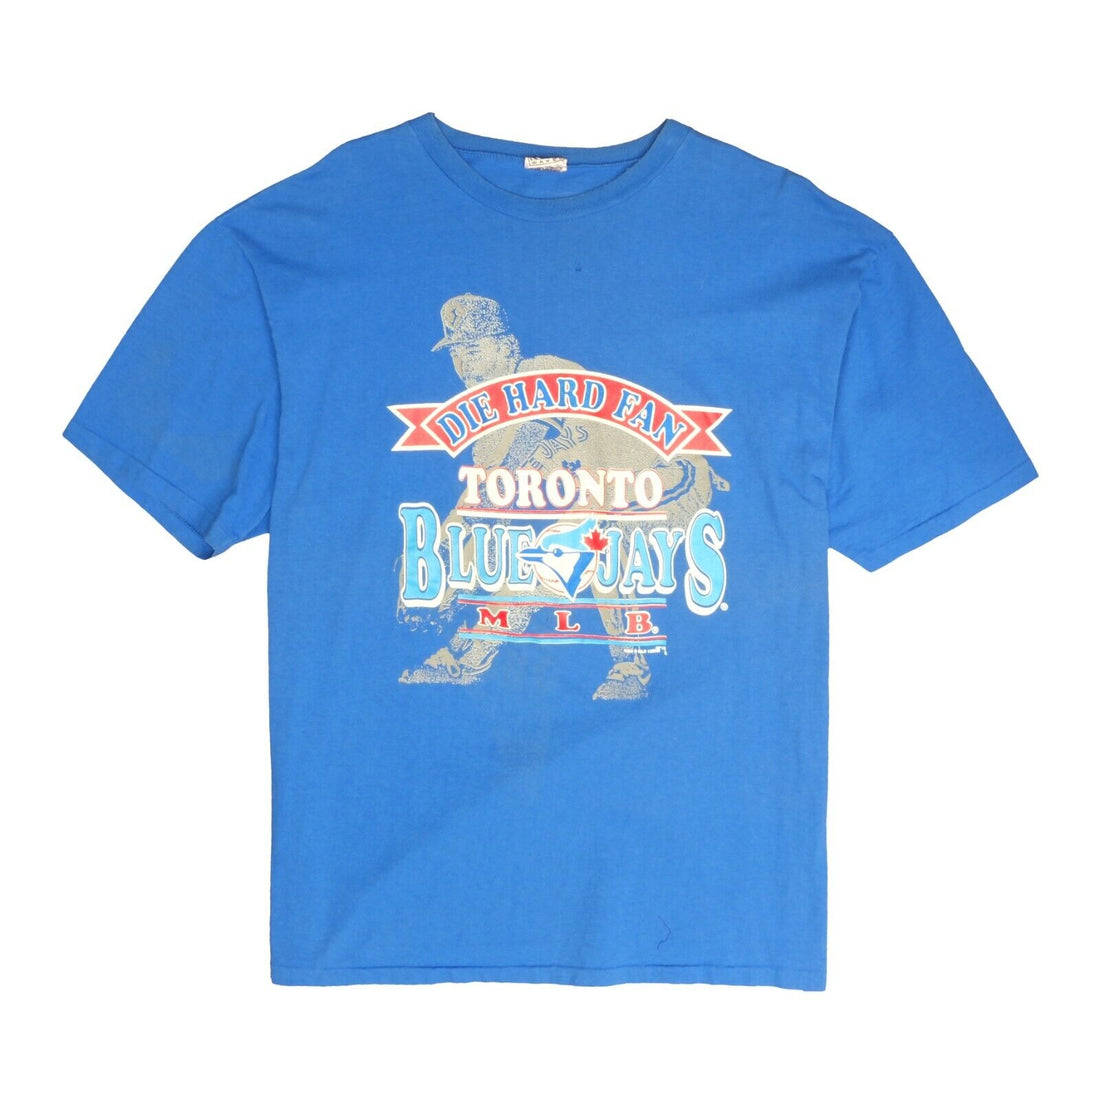 Vintage Toronto Blue Jays Die Hard Fan T-Shirt Size XL Blue 1992 90s MLB